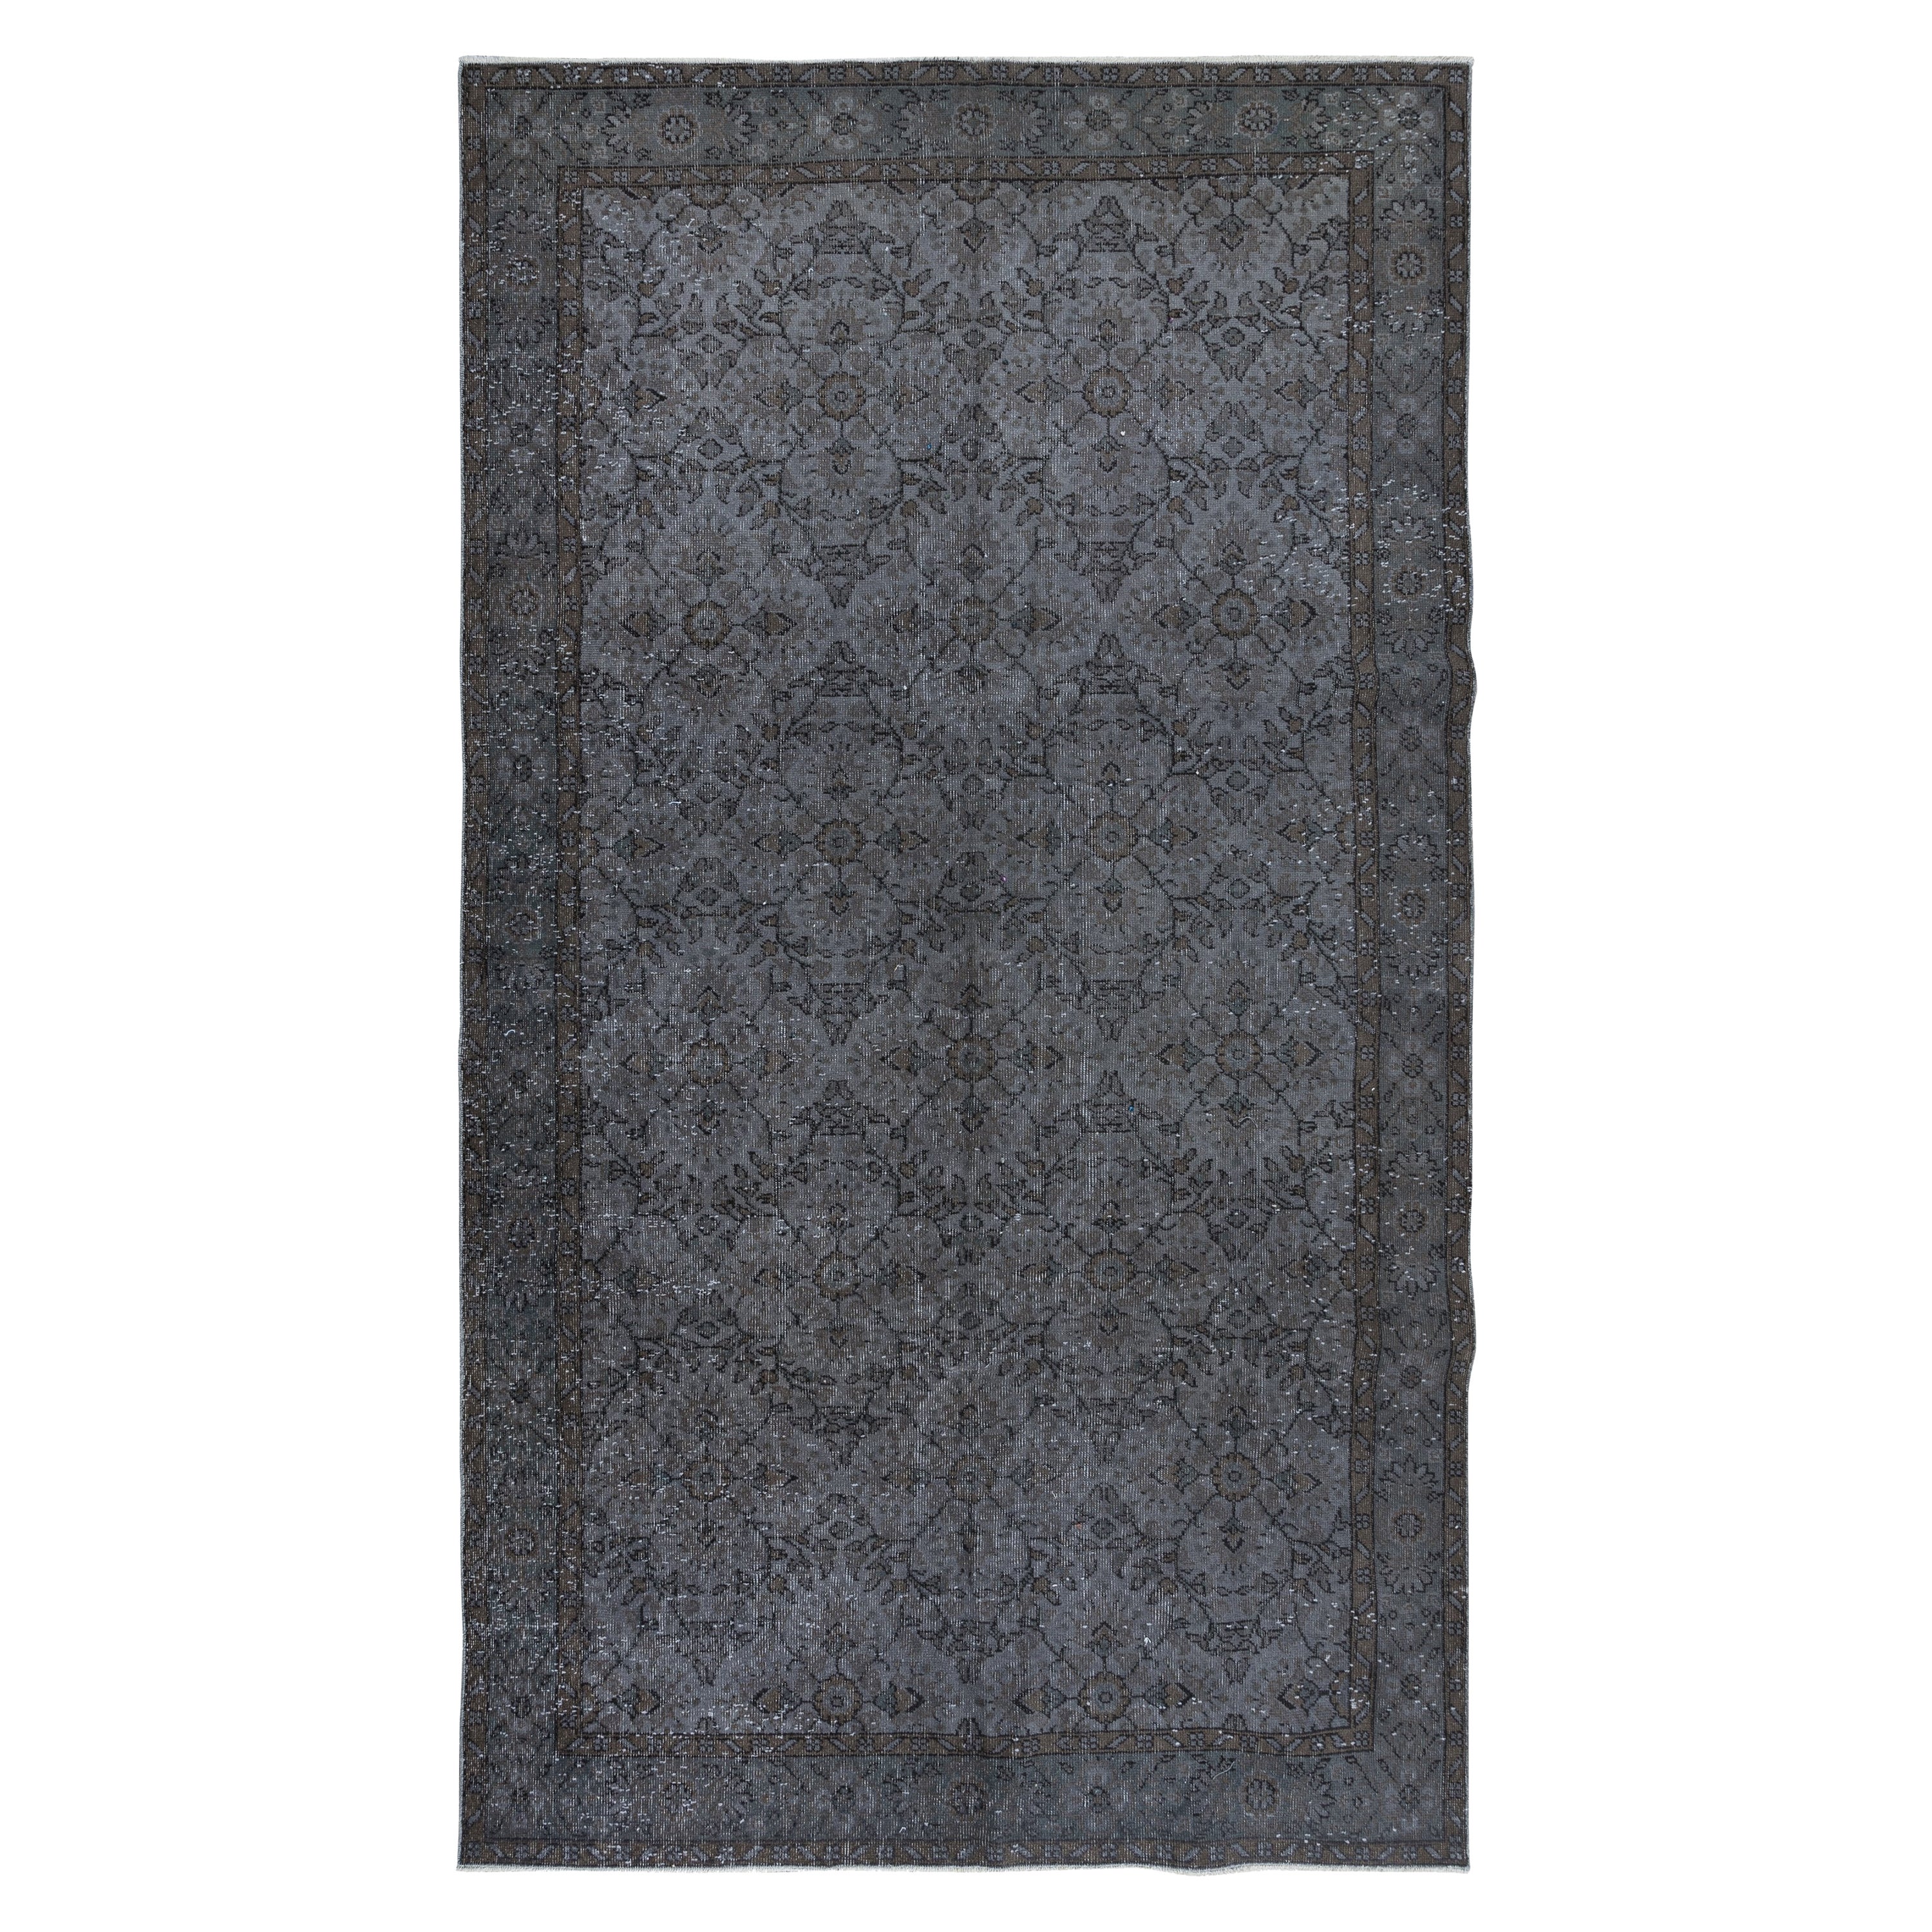 5.6x9.7 Ft Modern Turkish Rug in Gray, Decorative Handmade Floral Design Carpet For Sale